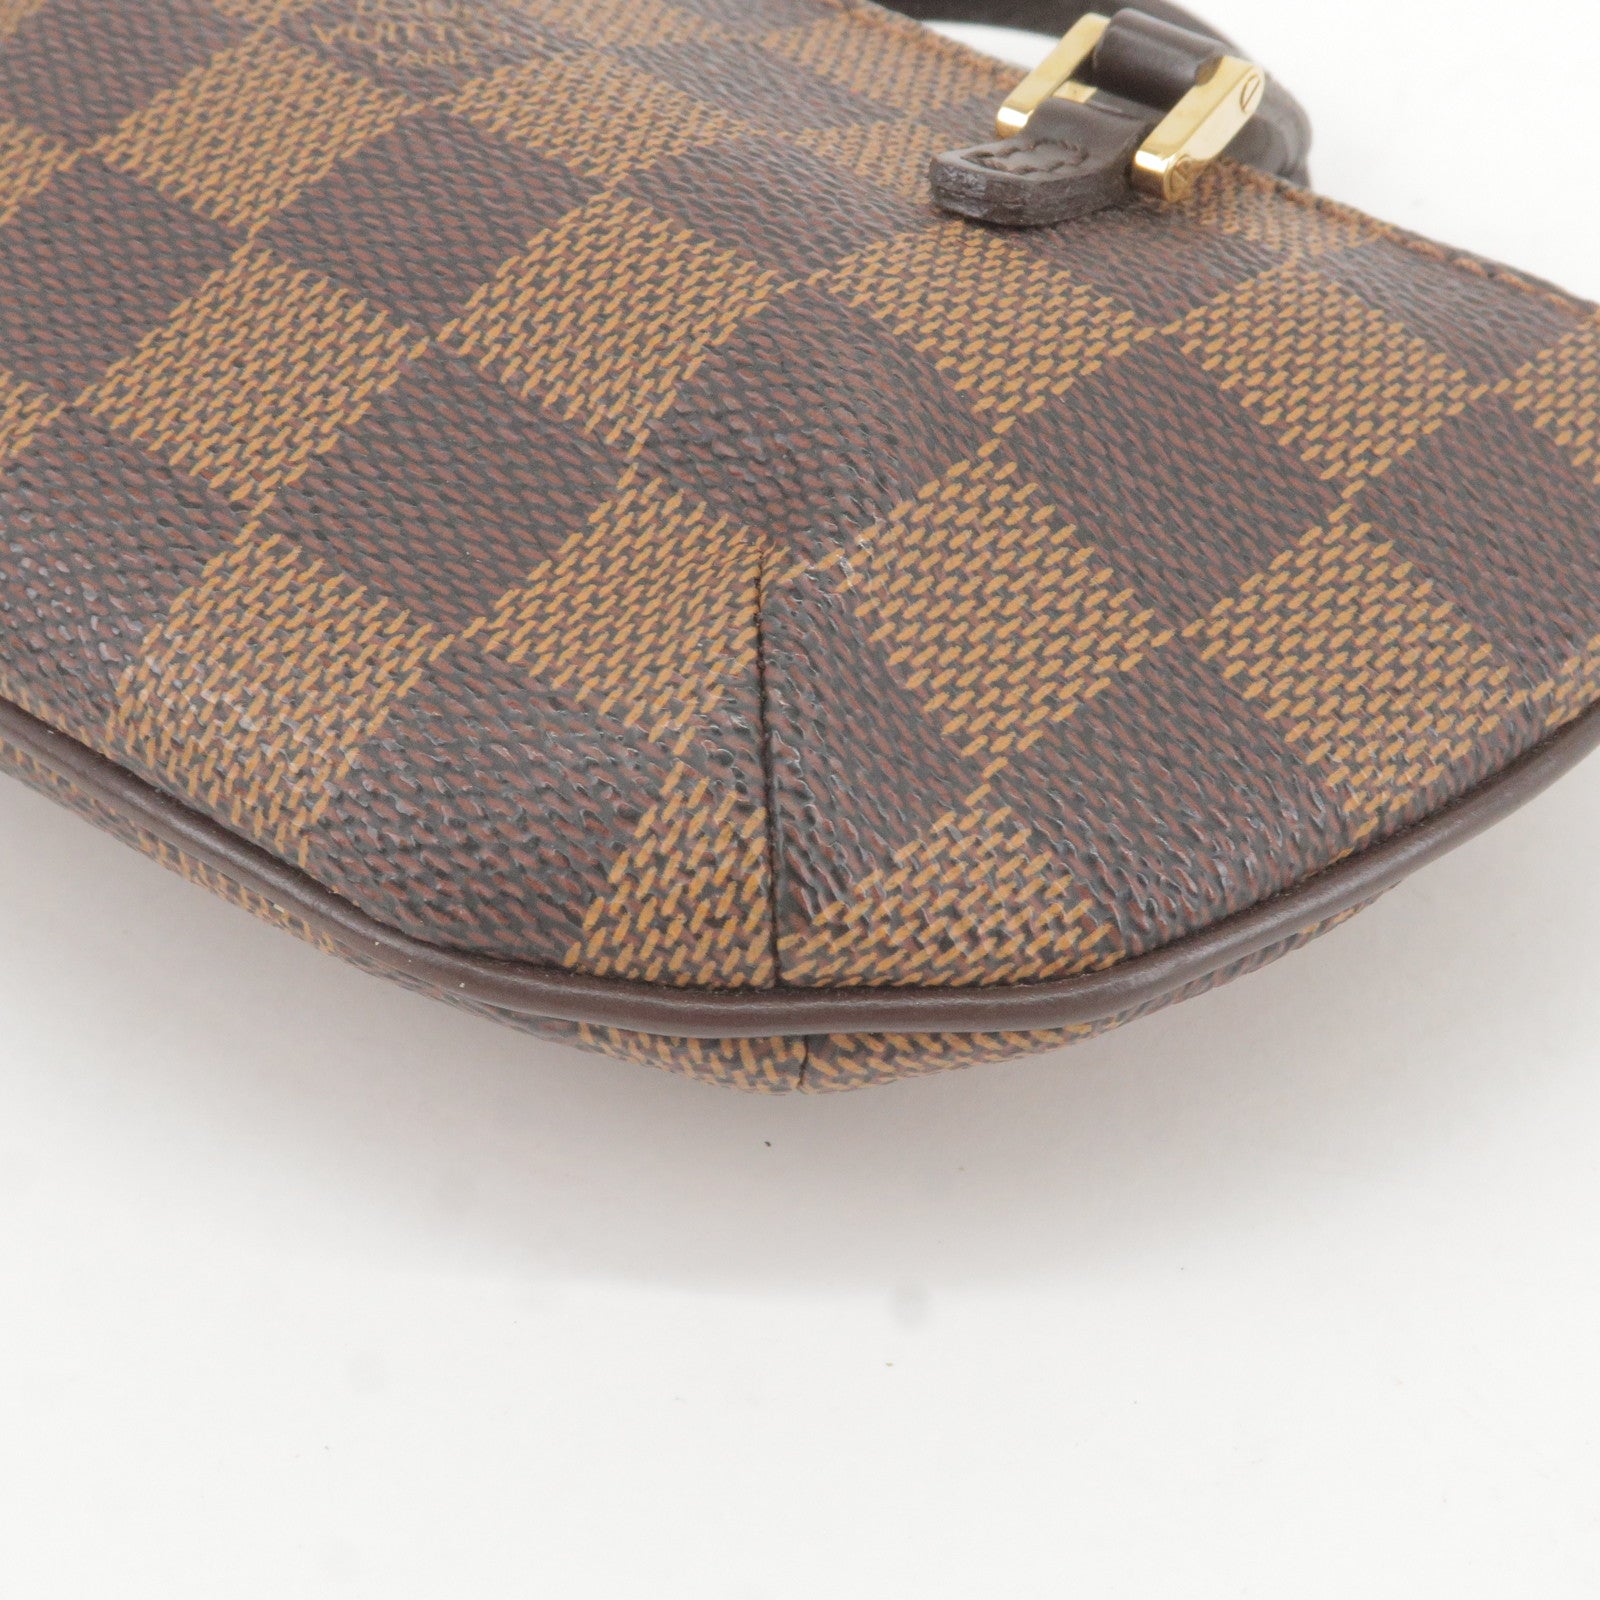 Louis Vuitton Monogram Moon Pochette (Handbags)